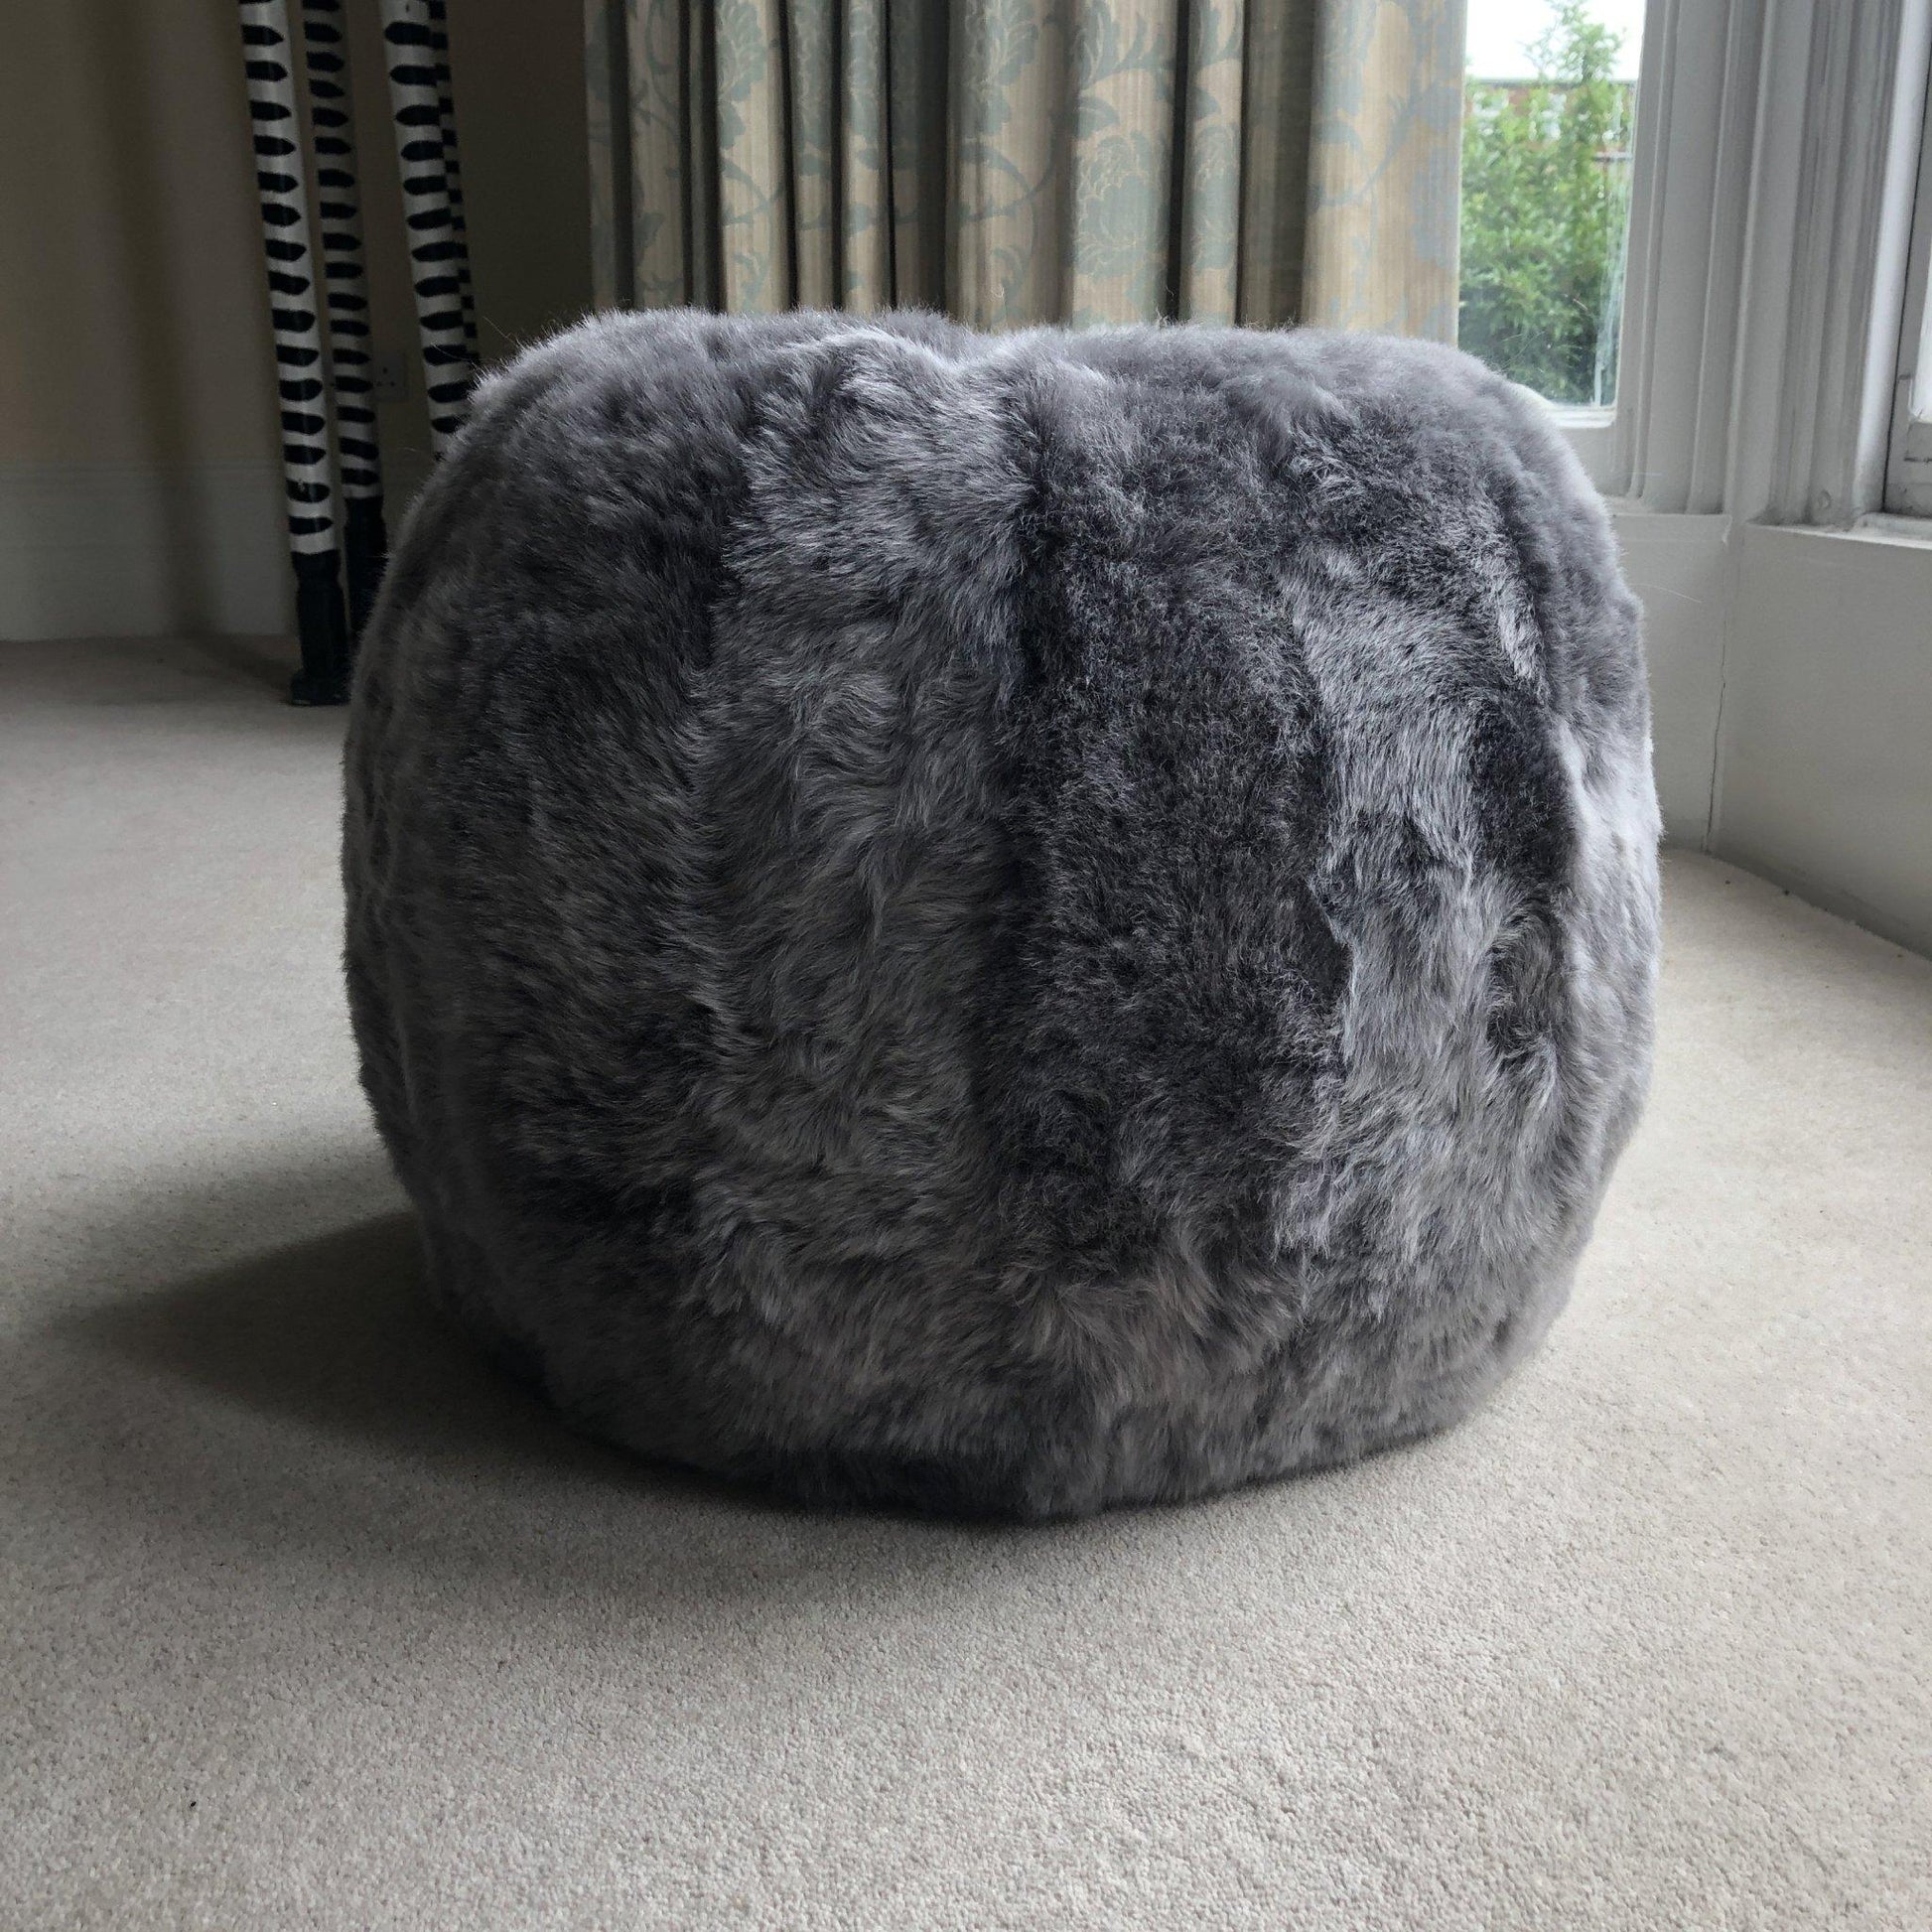 The Boule Icelandic Sheepskin Pouffe in Cool Grey Shorn by Wildash London - Haven